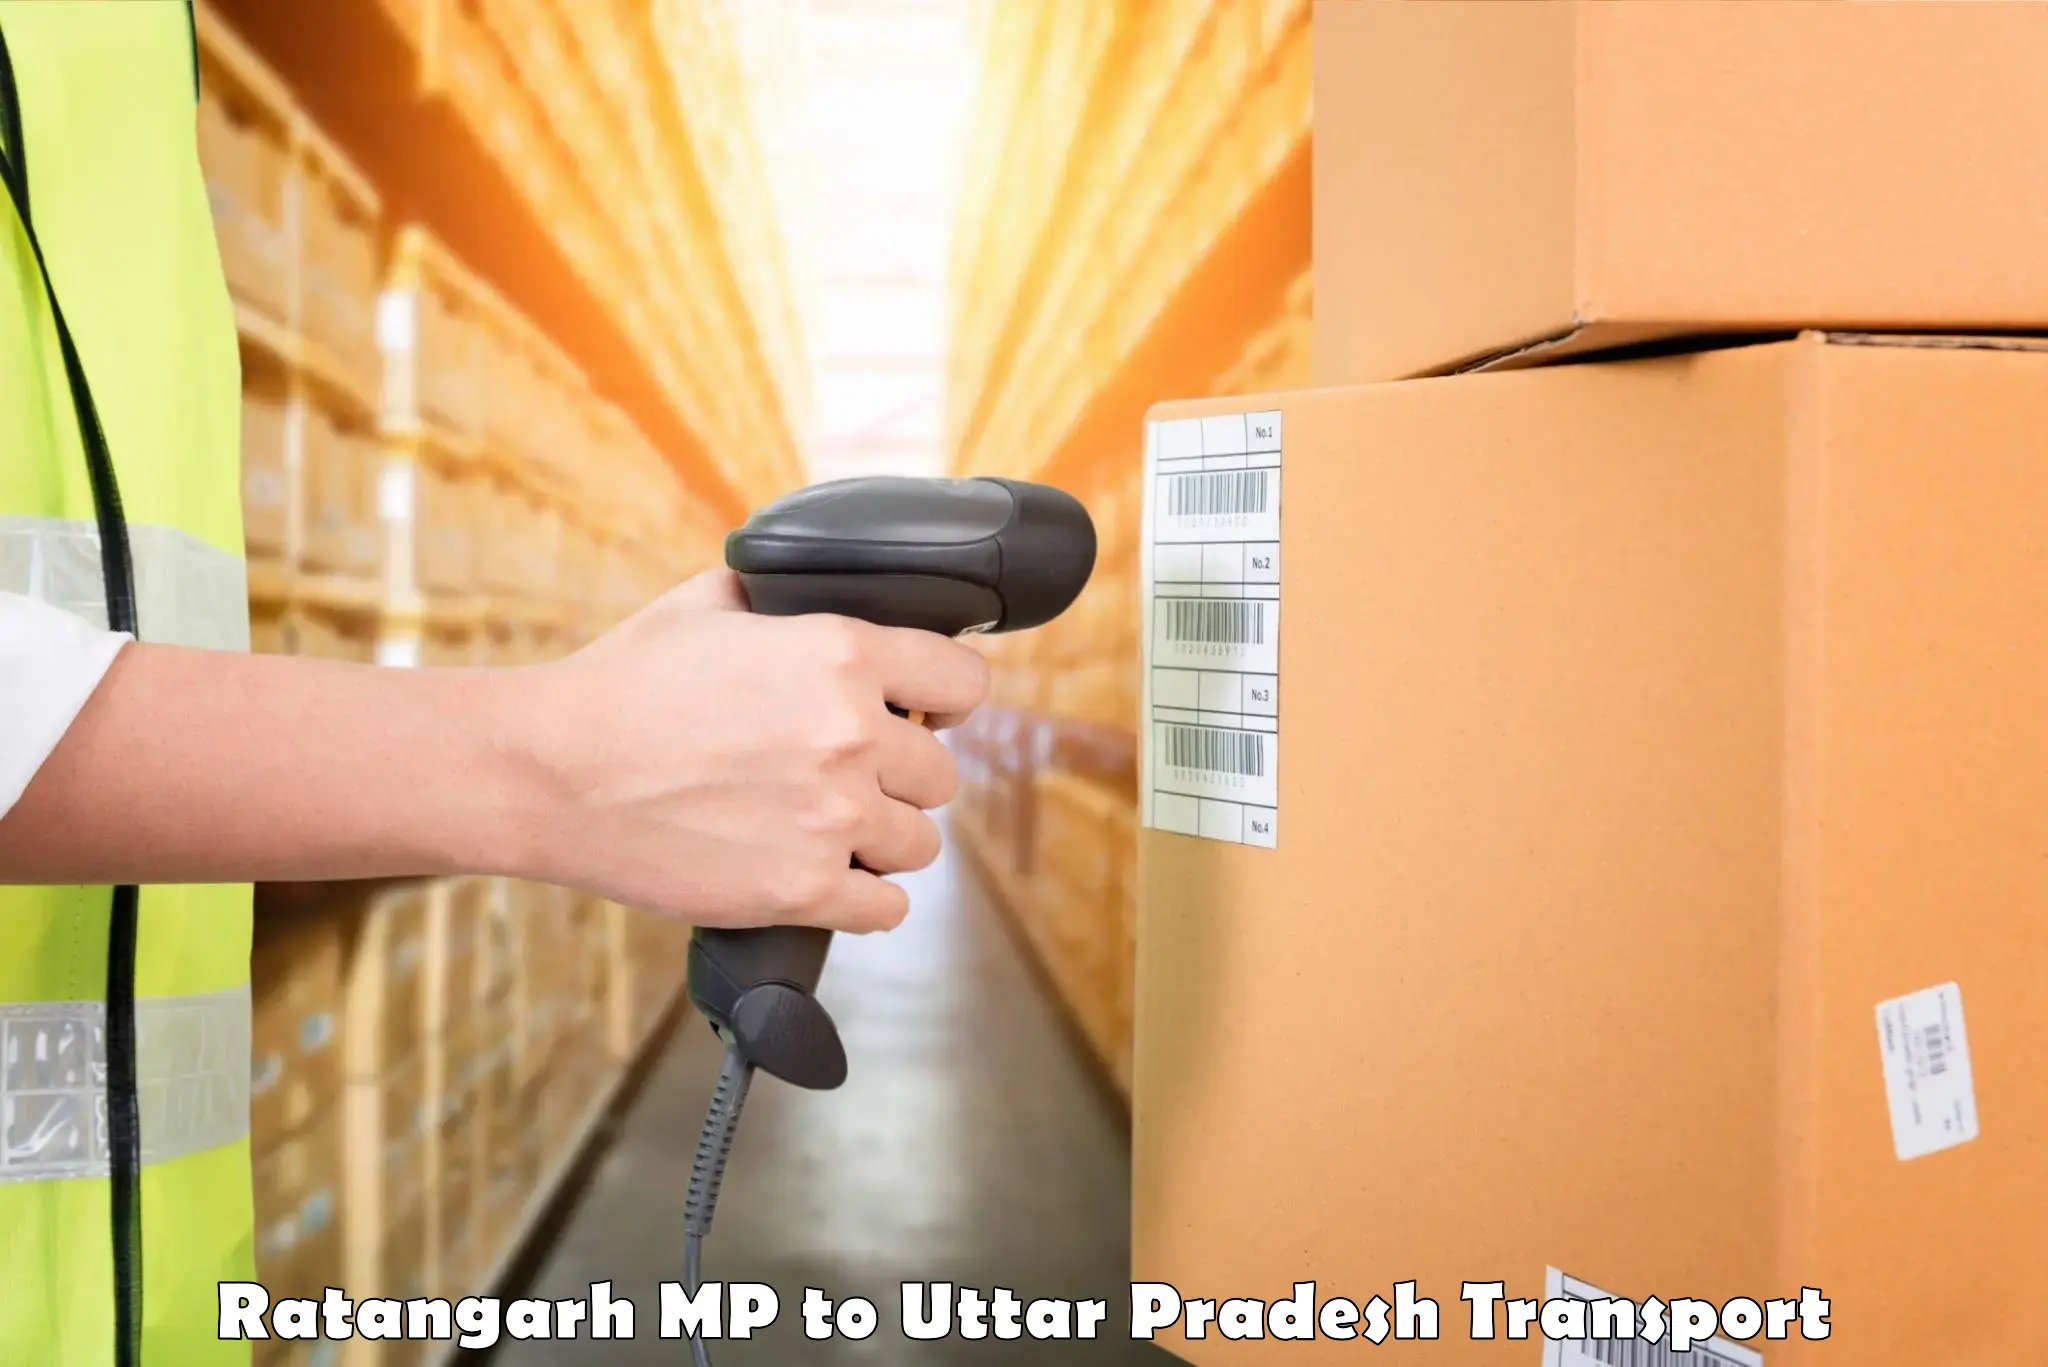 Shipping partner Ratangarh MP to Noida